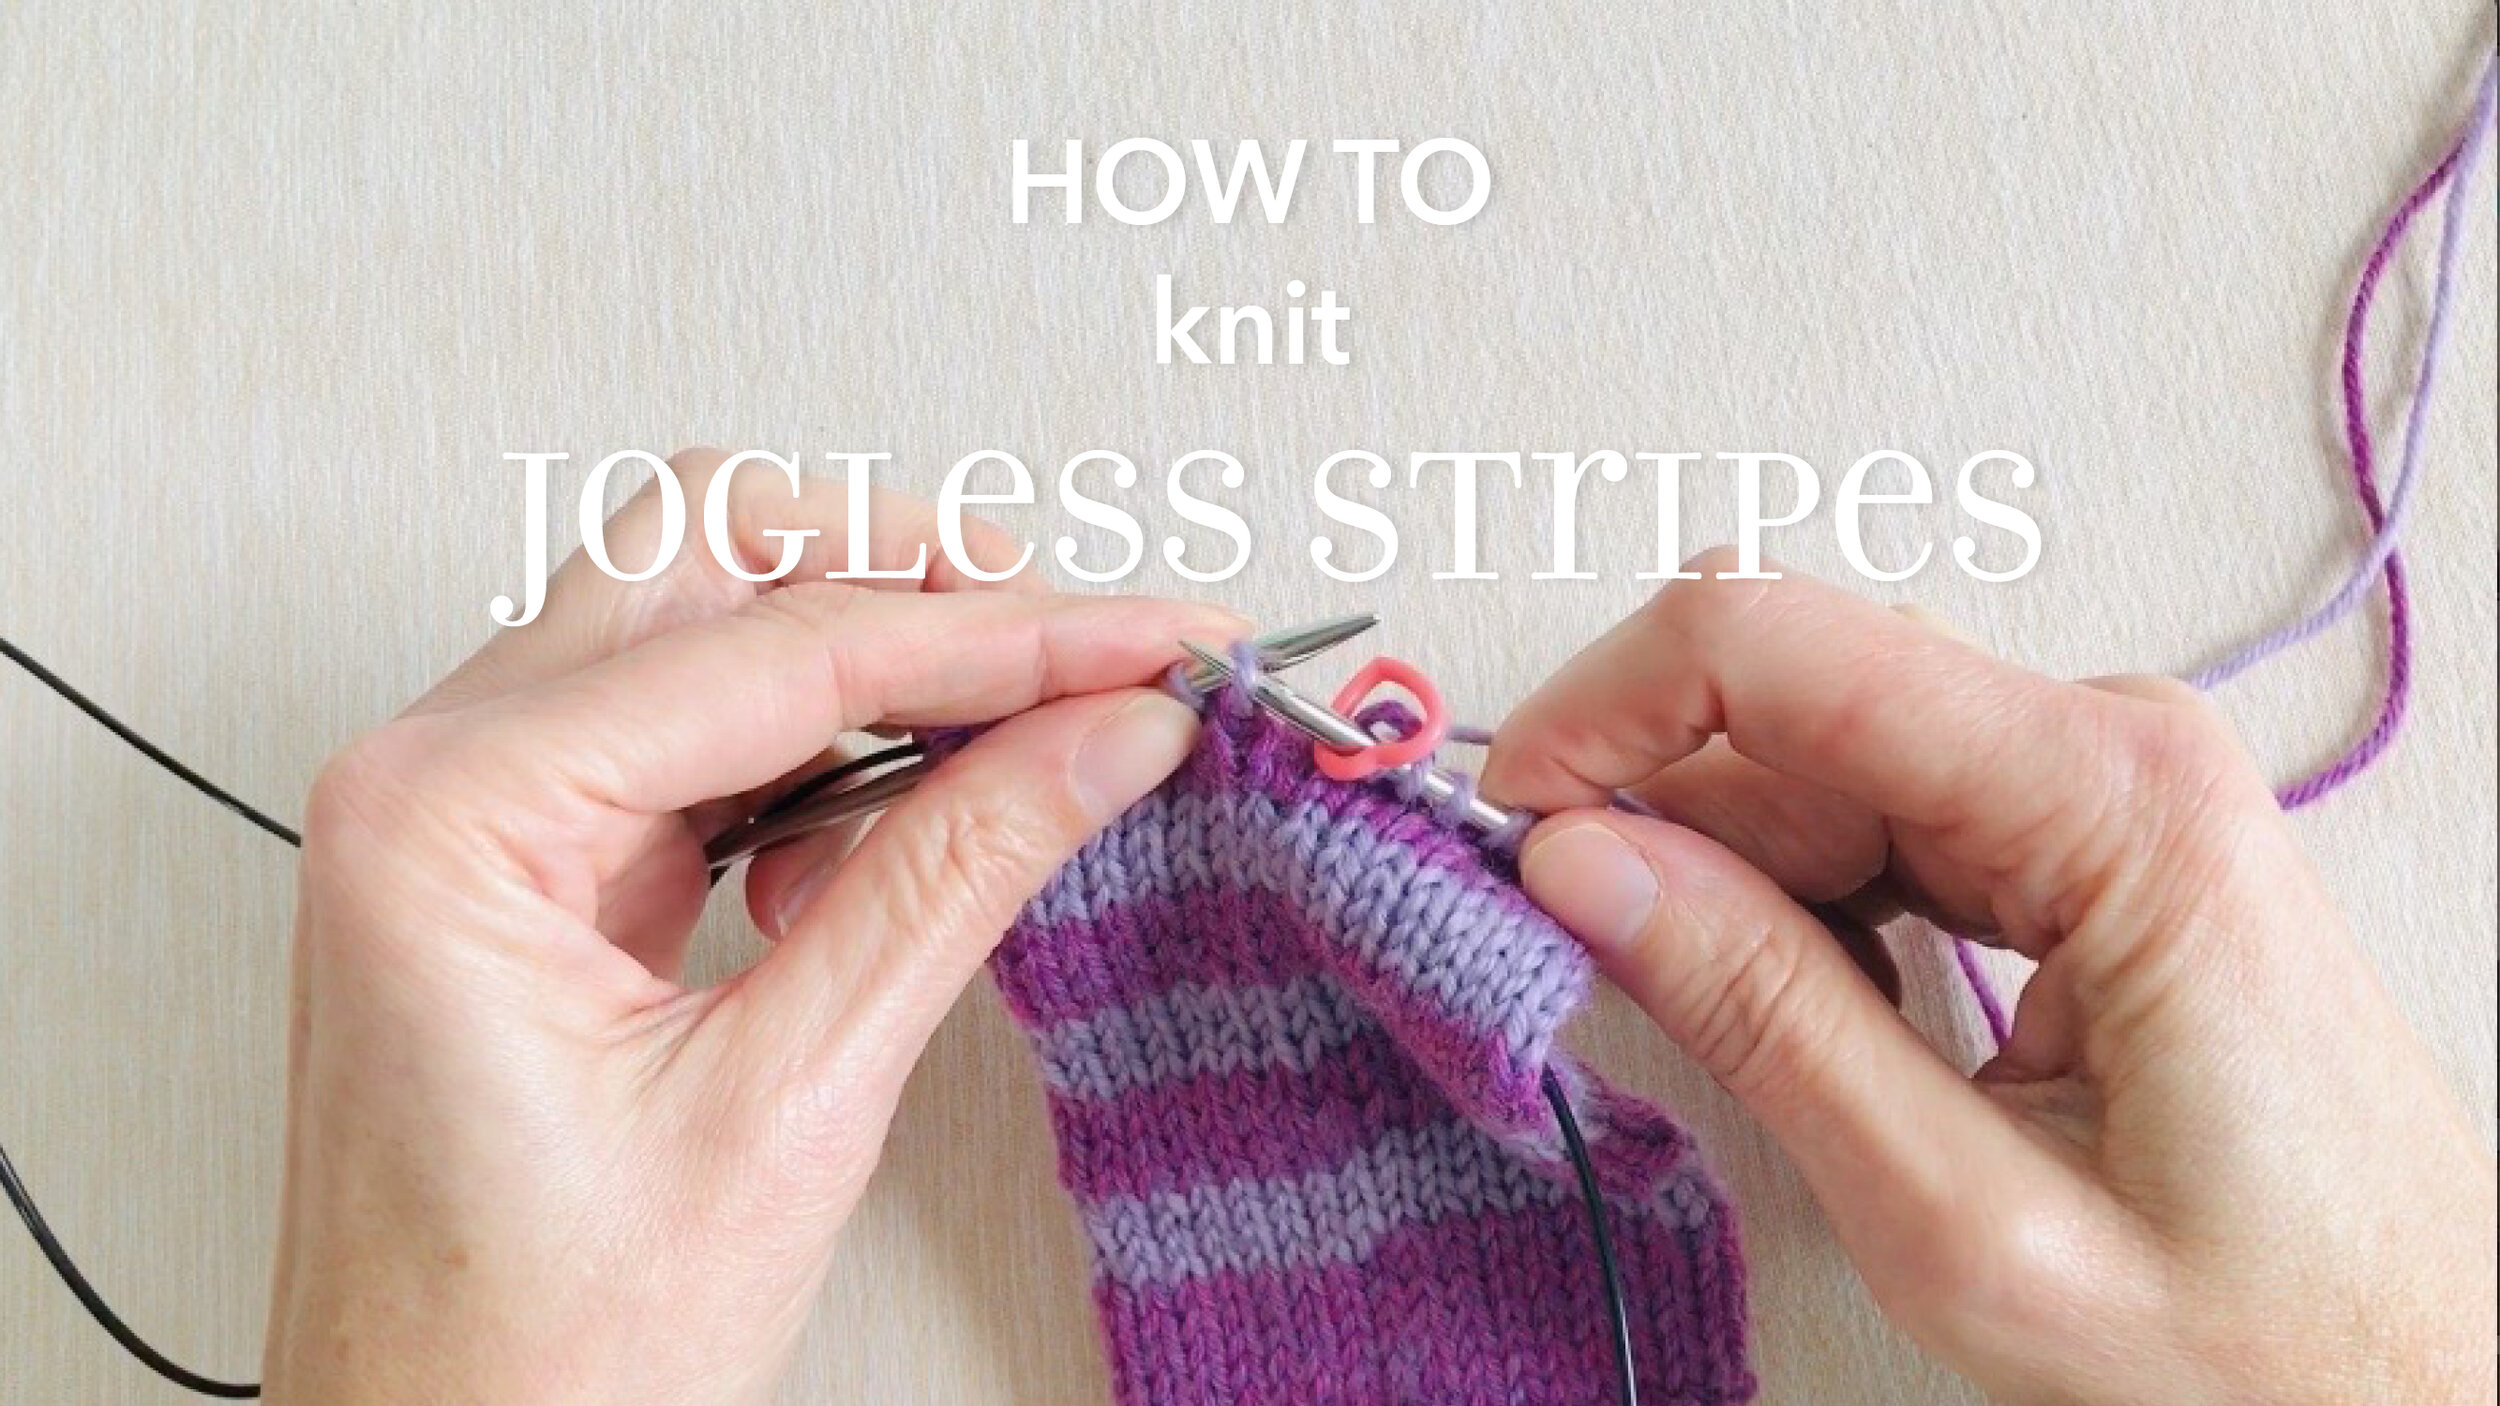 How To Knit Jogless Stripes